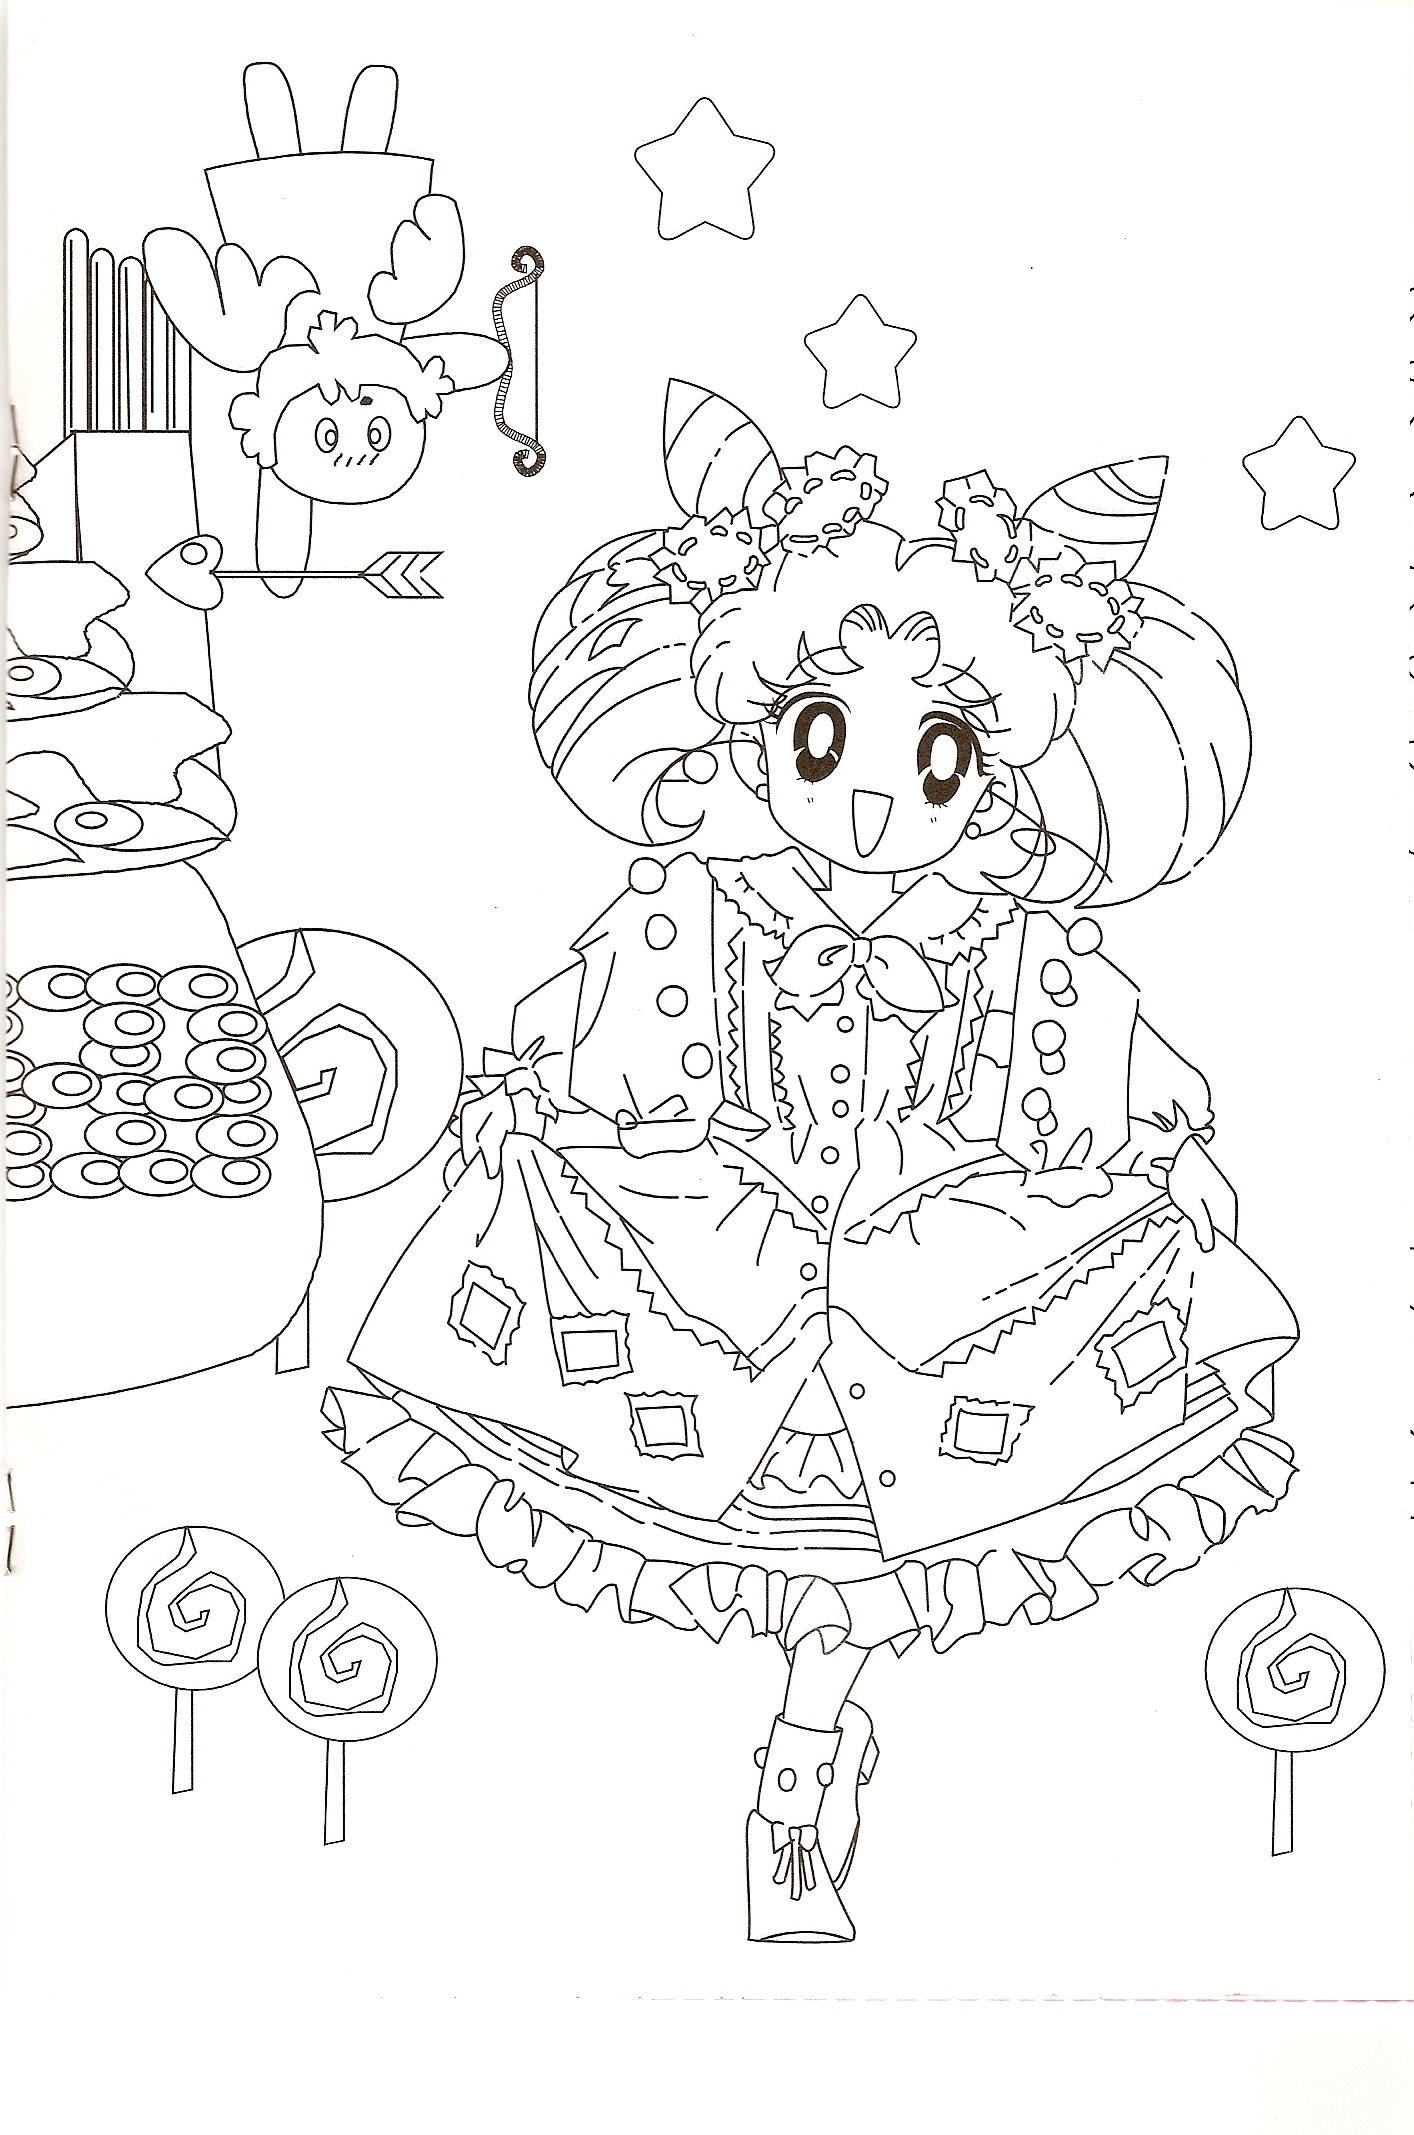 Sailor_Moon_coloring_book7_011.jpg